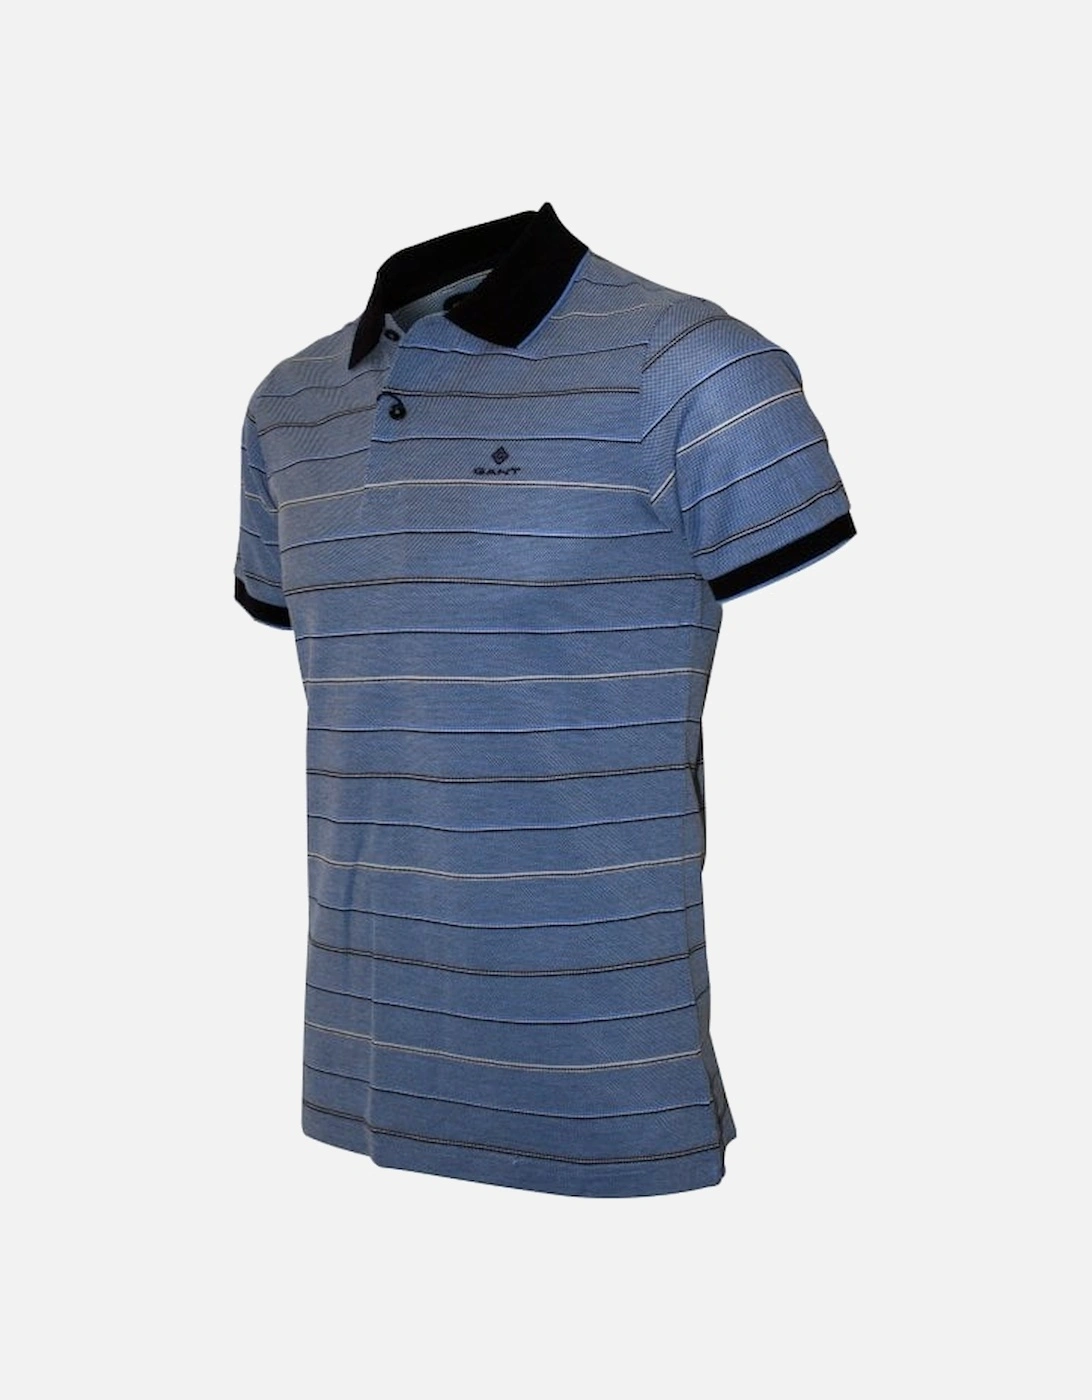 Oxford Stripe Pique Rugger Polo Shirt, Palace Blue